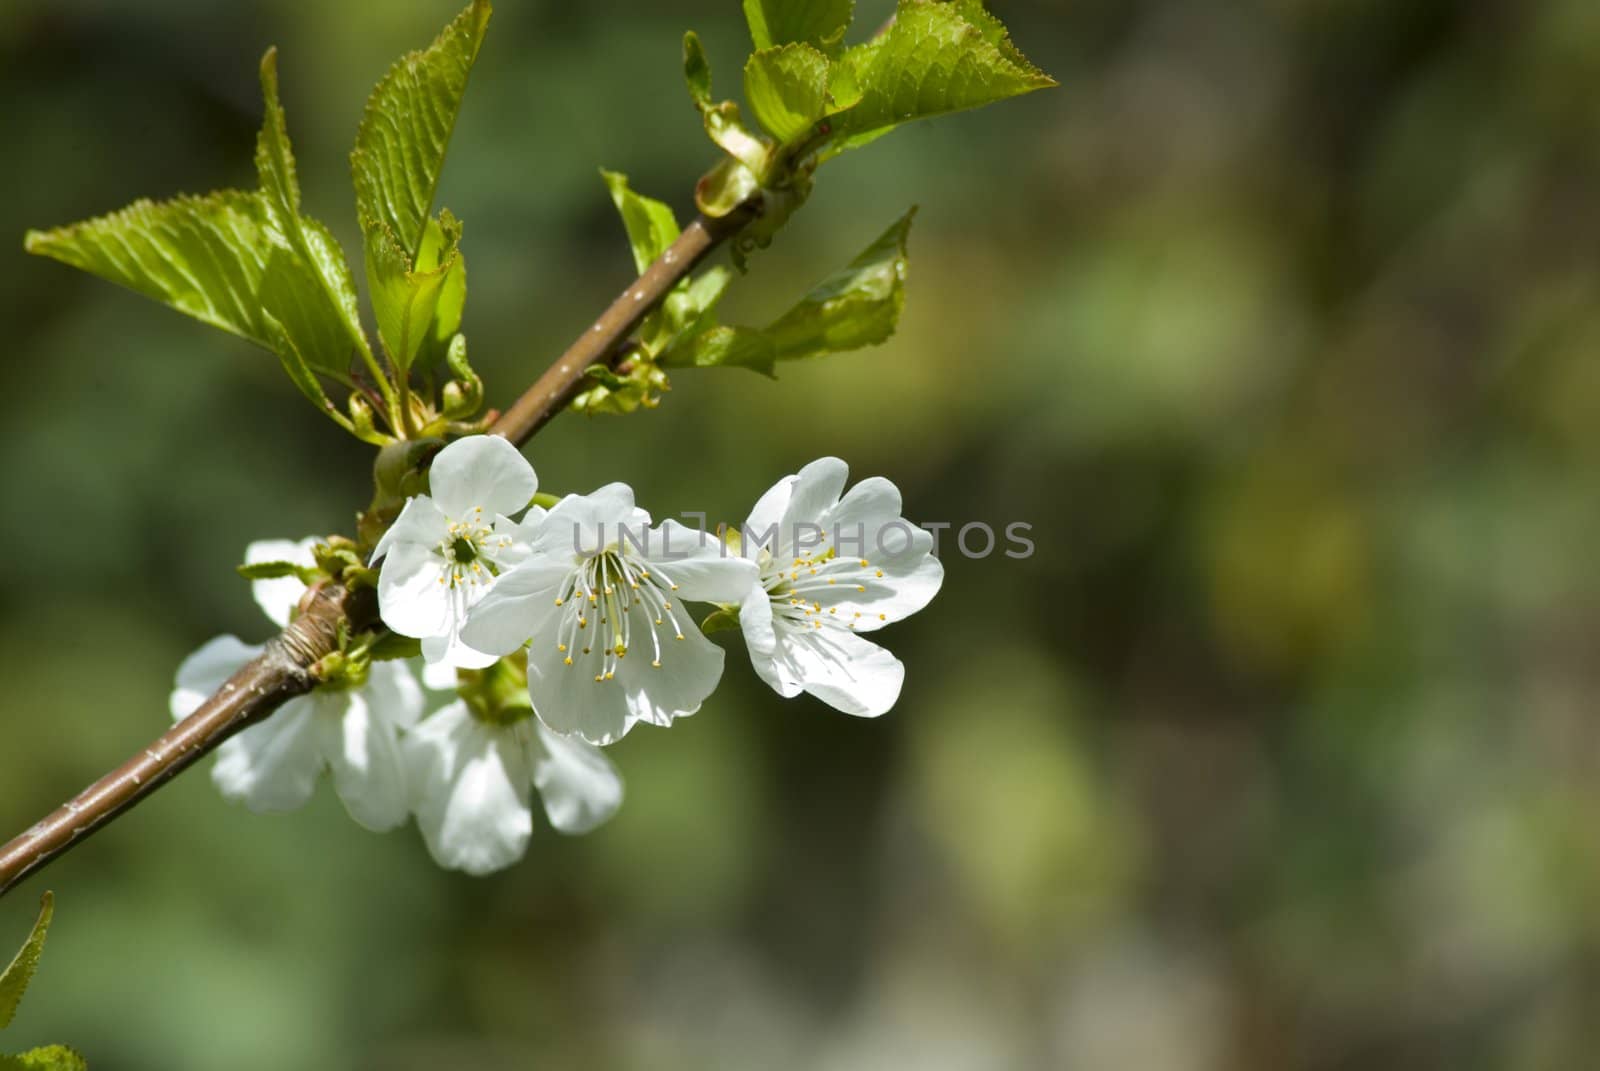 A fresh sprig of white spring cherry blossom